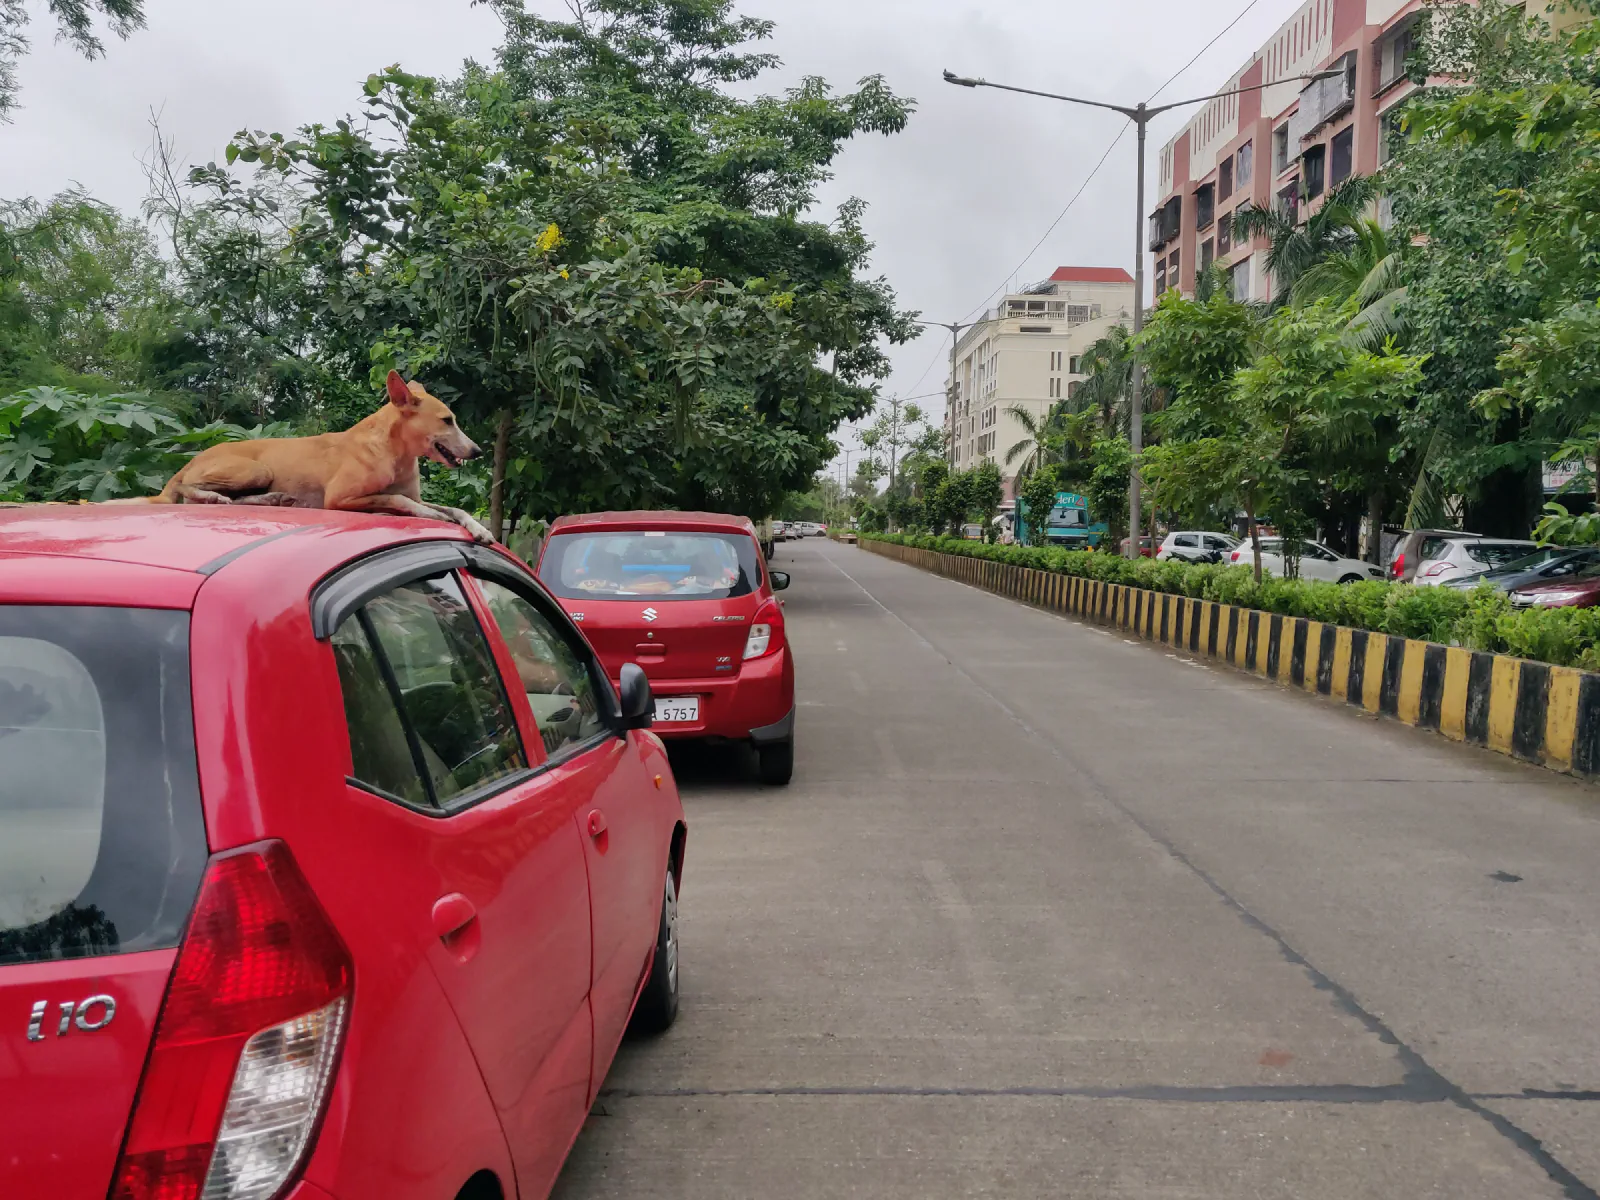 A dog sits on a parked car.
